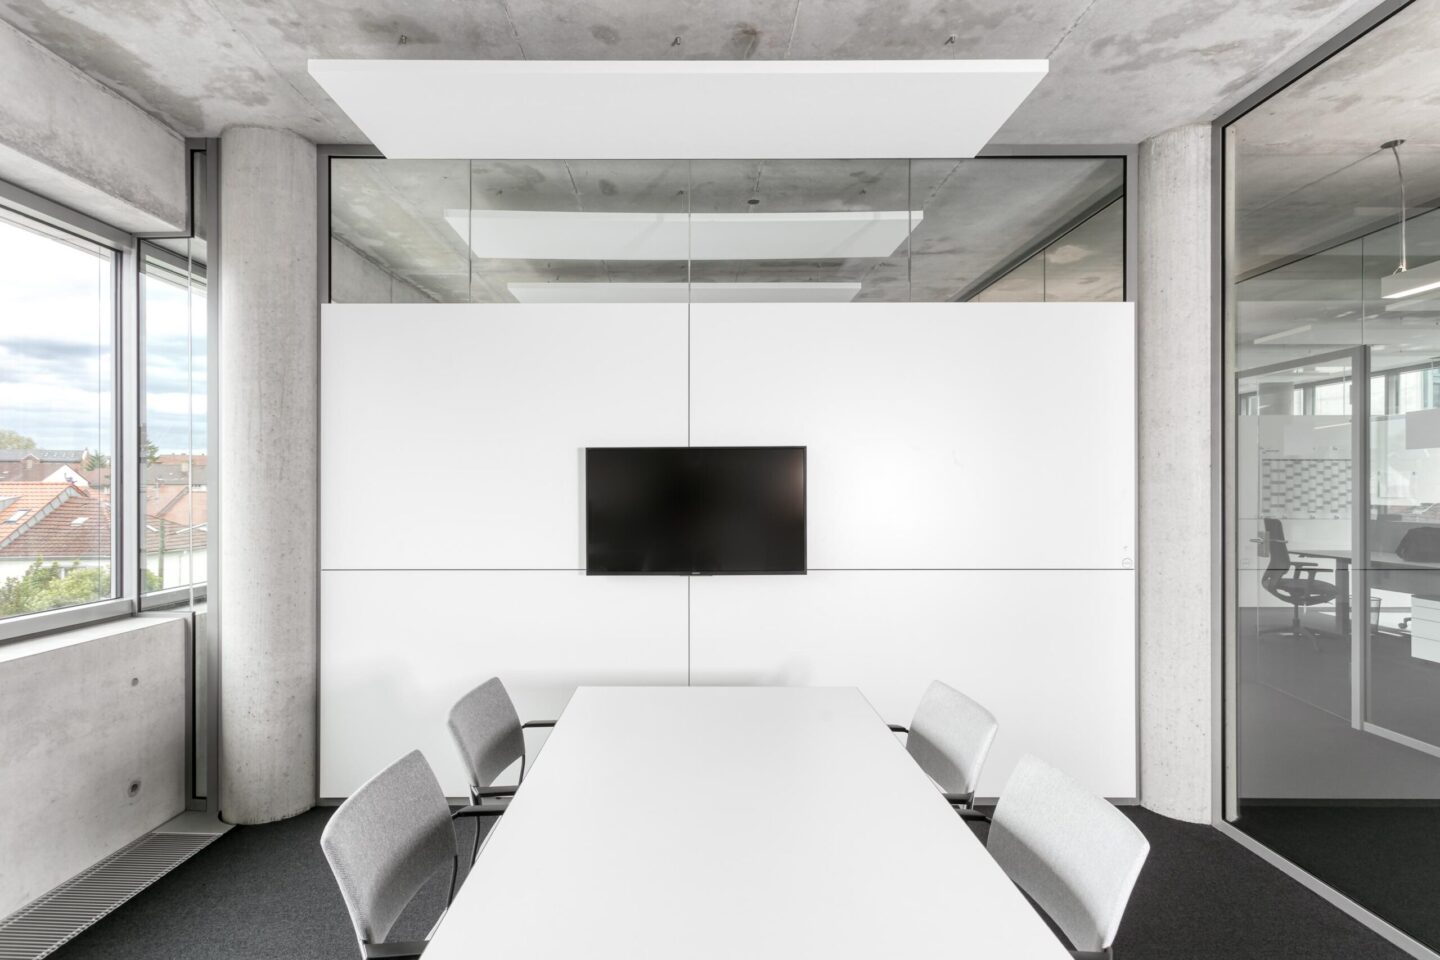 weisenburger Karlsruhe │ conference rooms │ fecoplan all-glass constructionopen office landscape